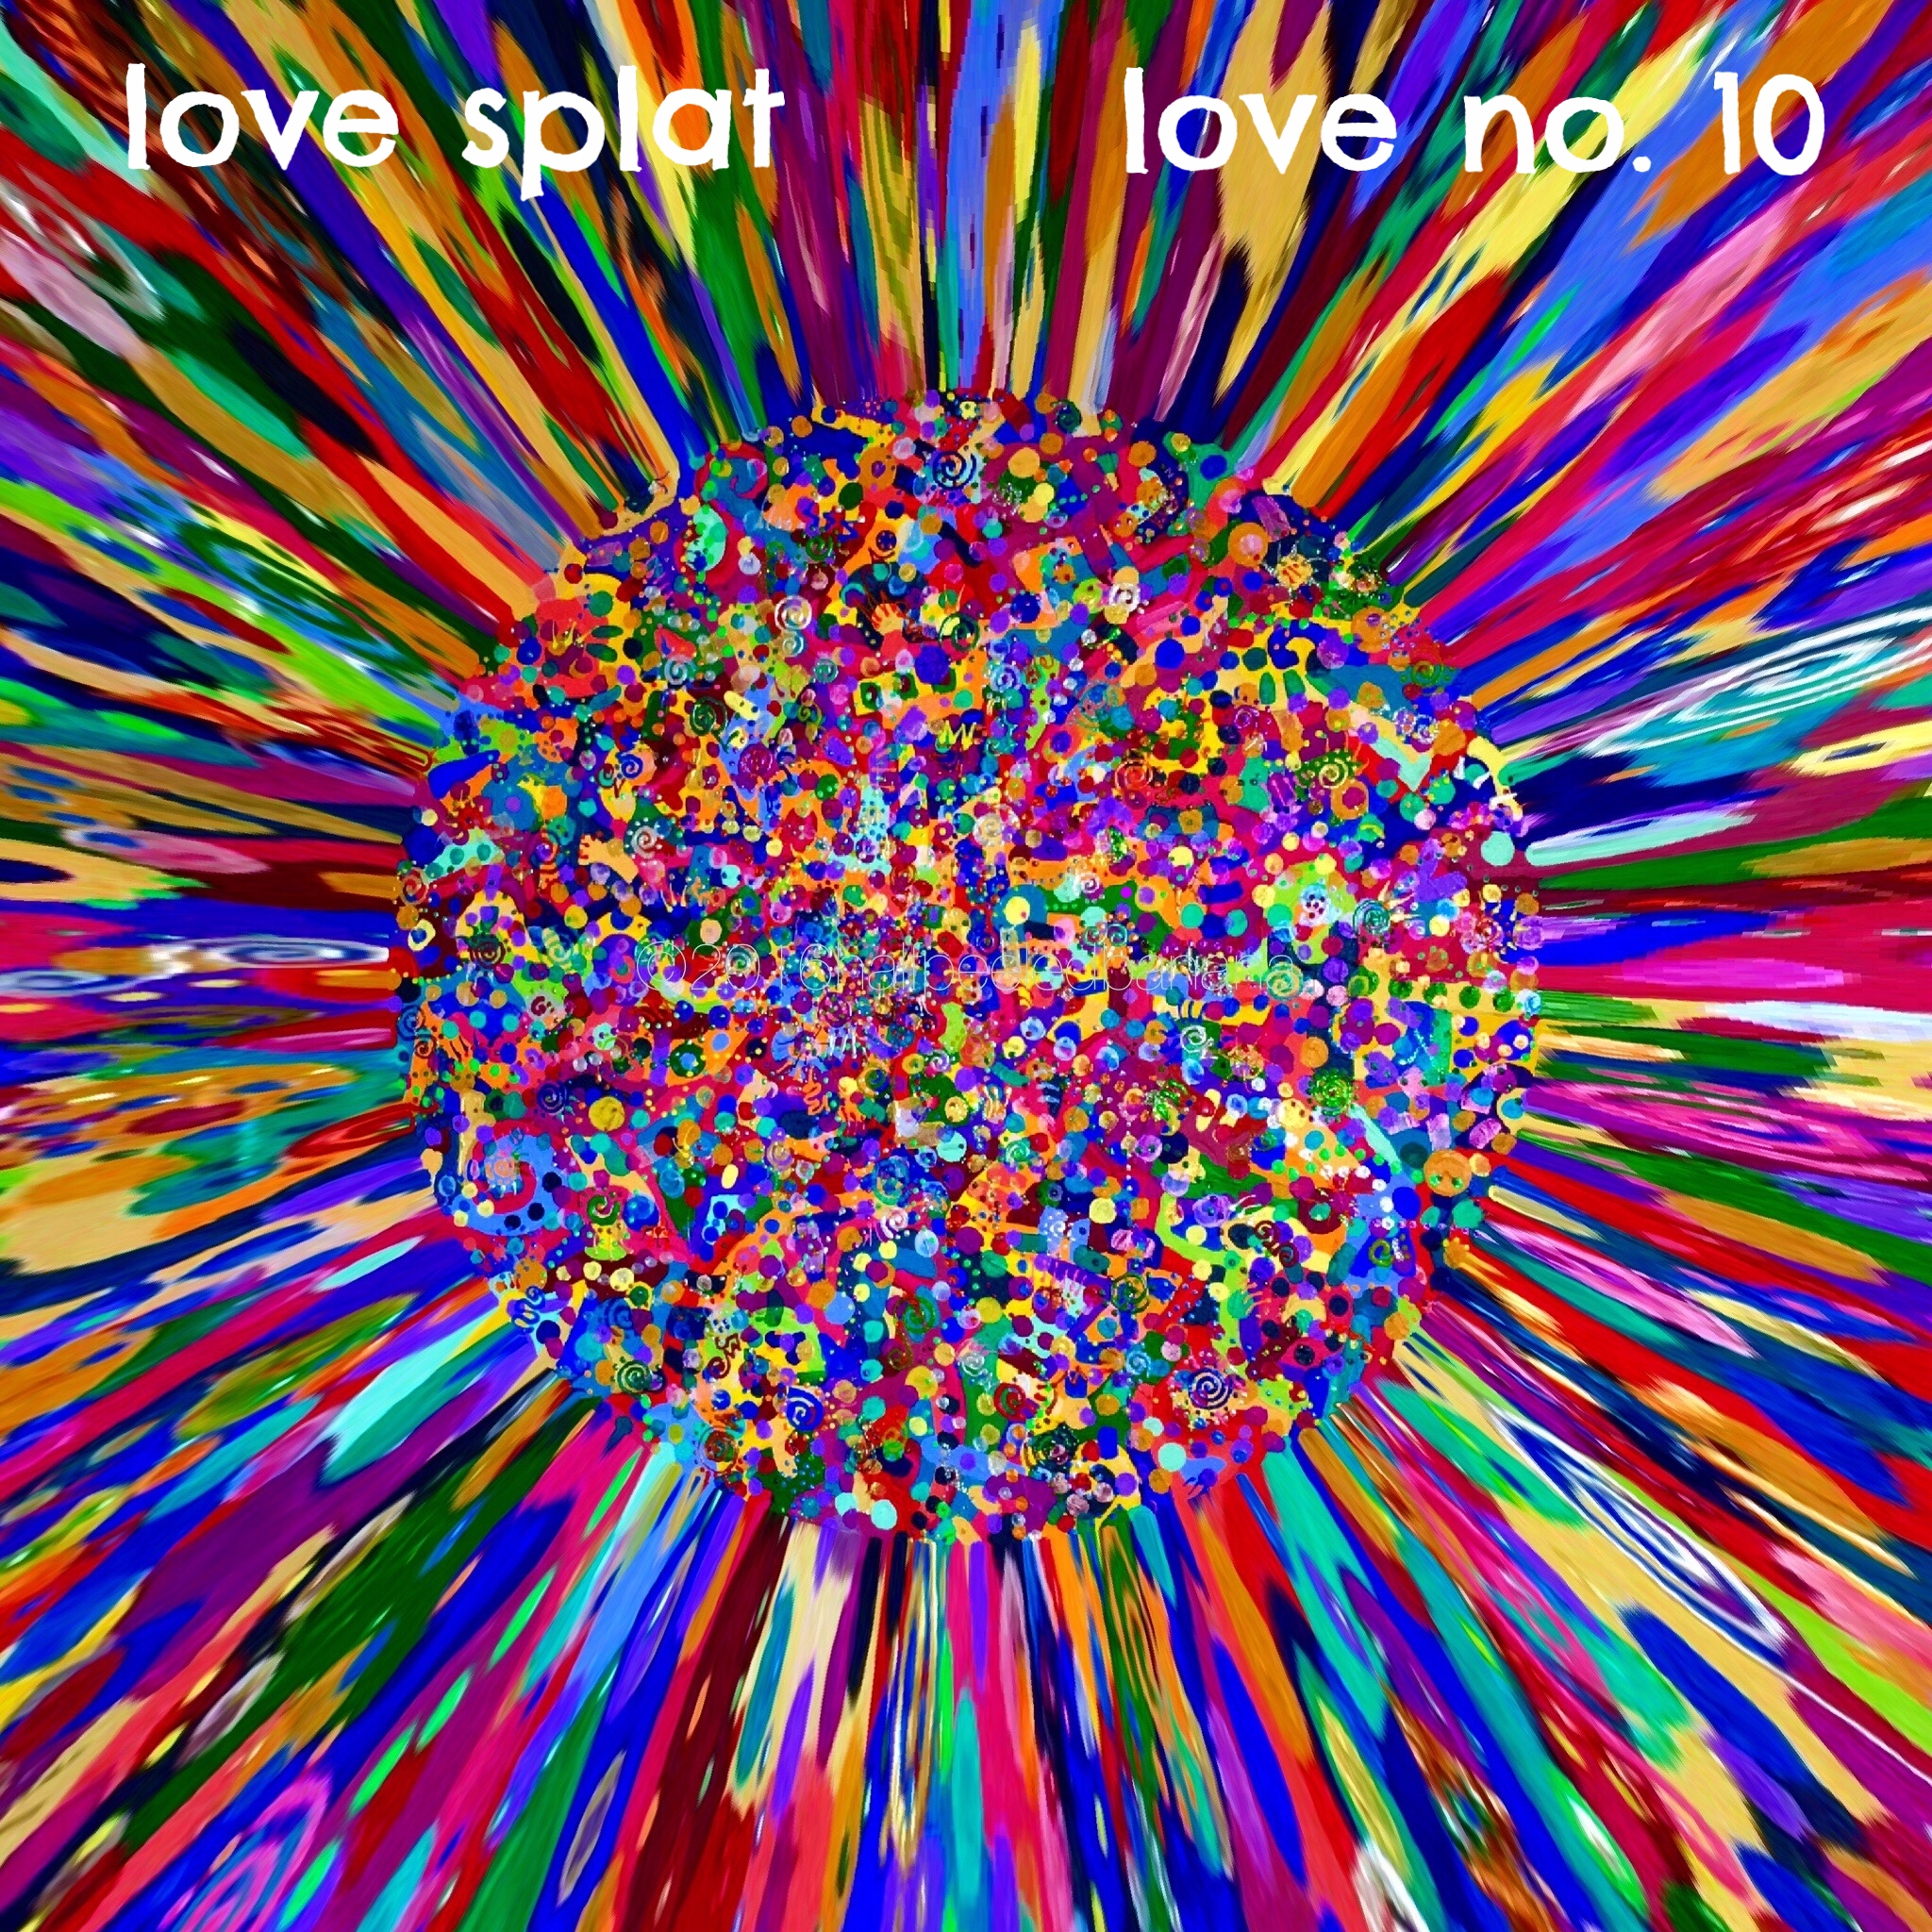 splat - love print no. 10